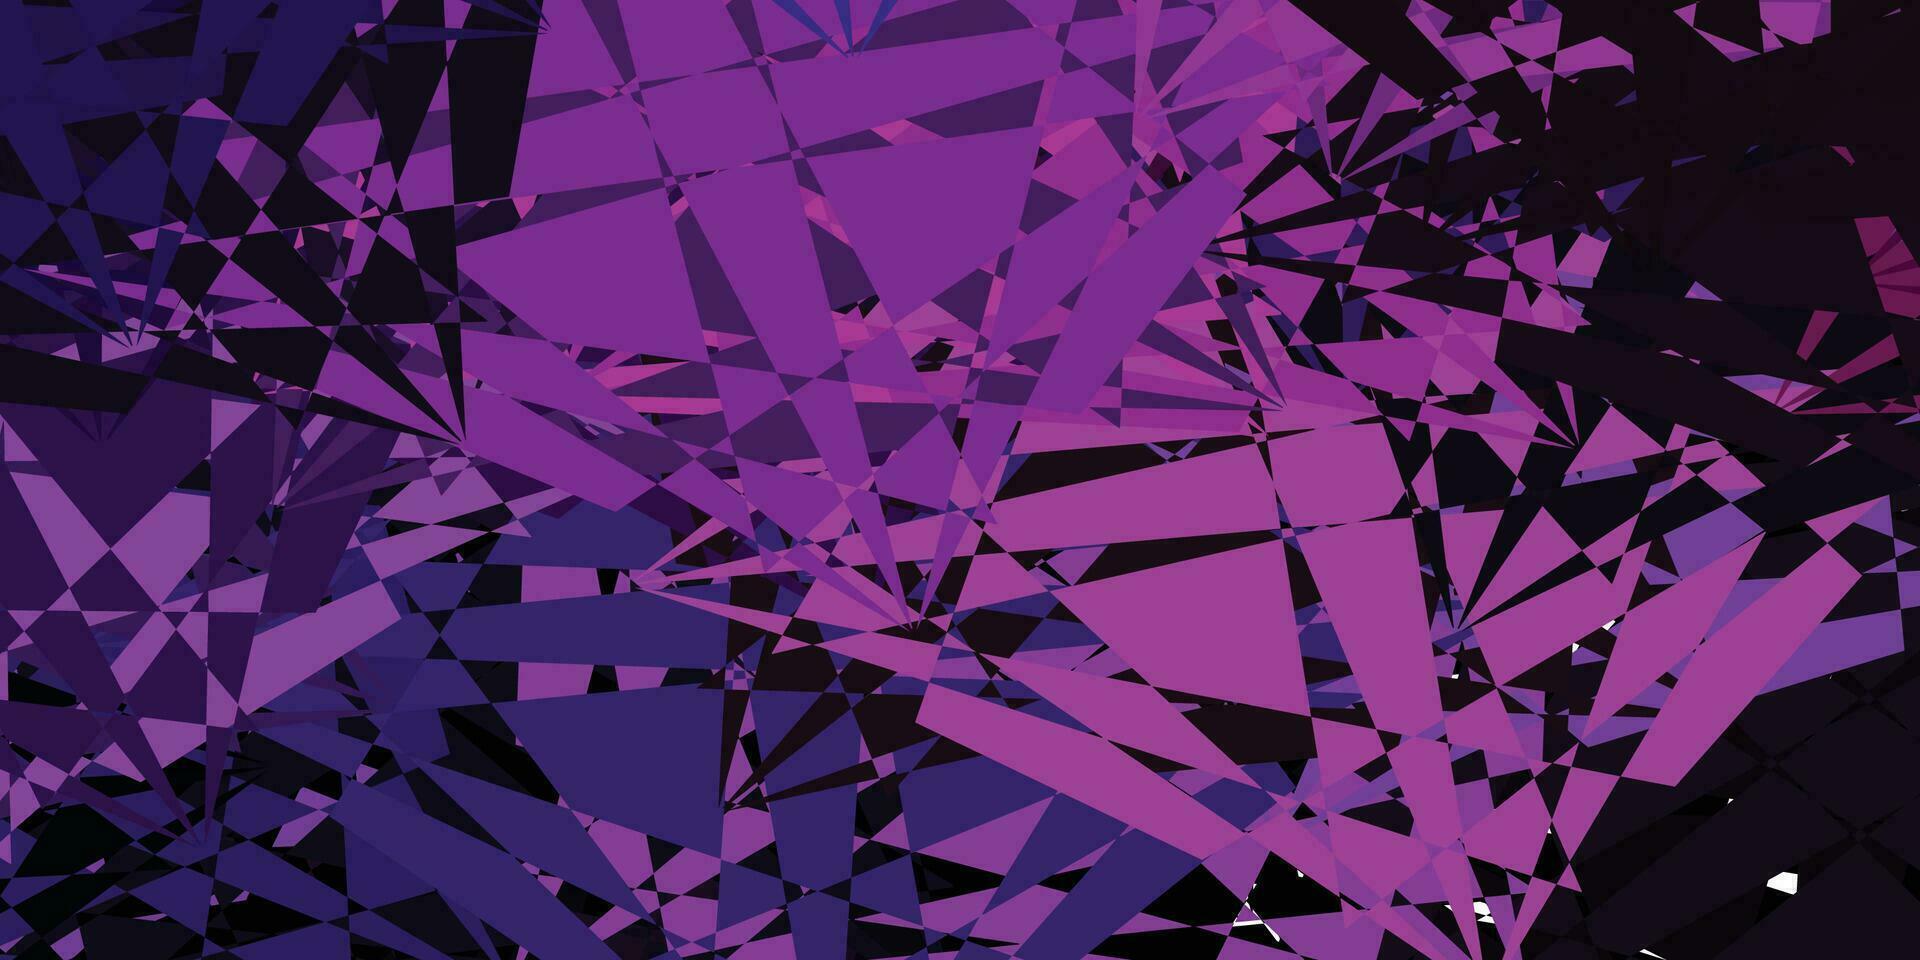 Fondo de vector púrpura oscuro con formas aleatorias.